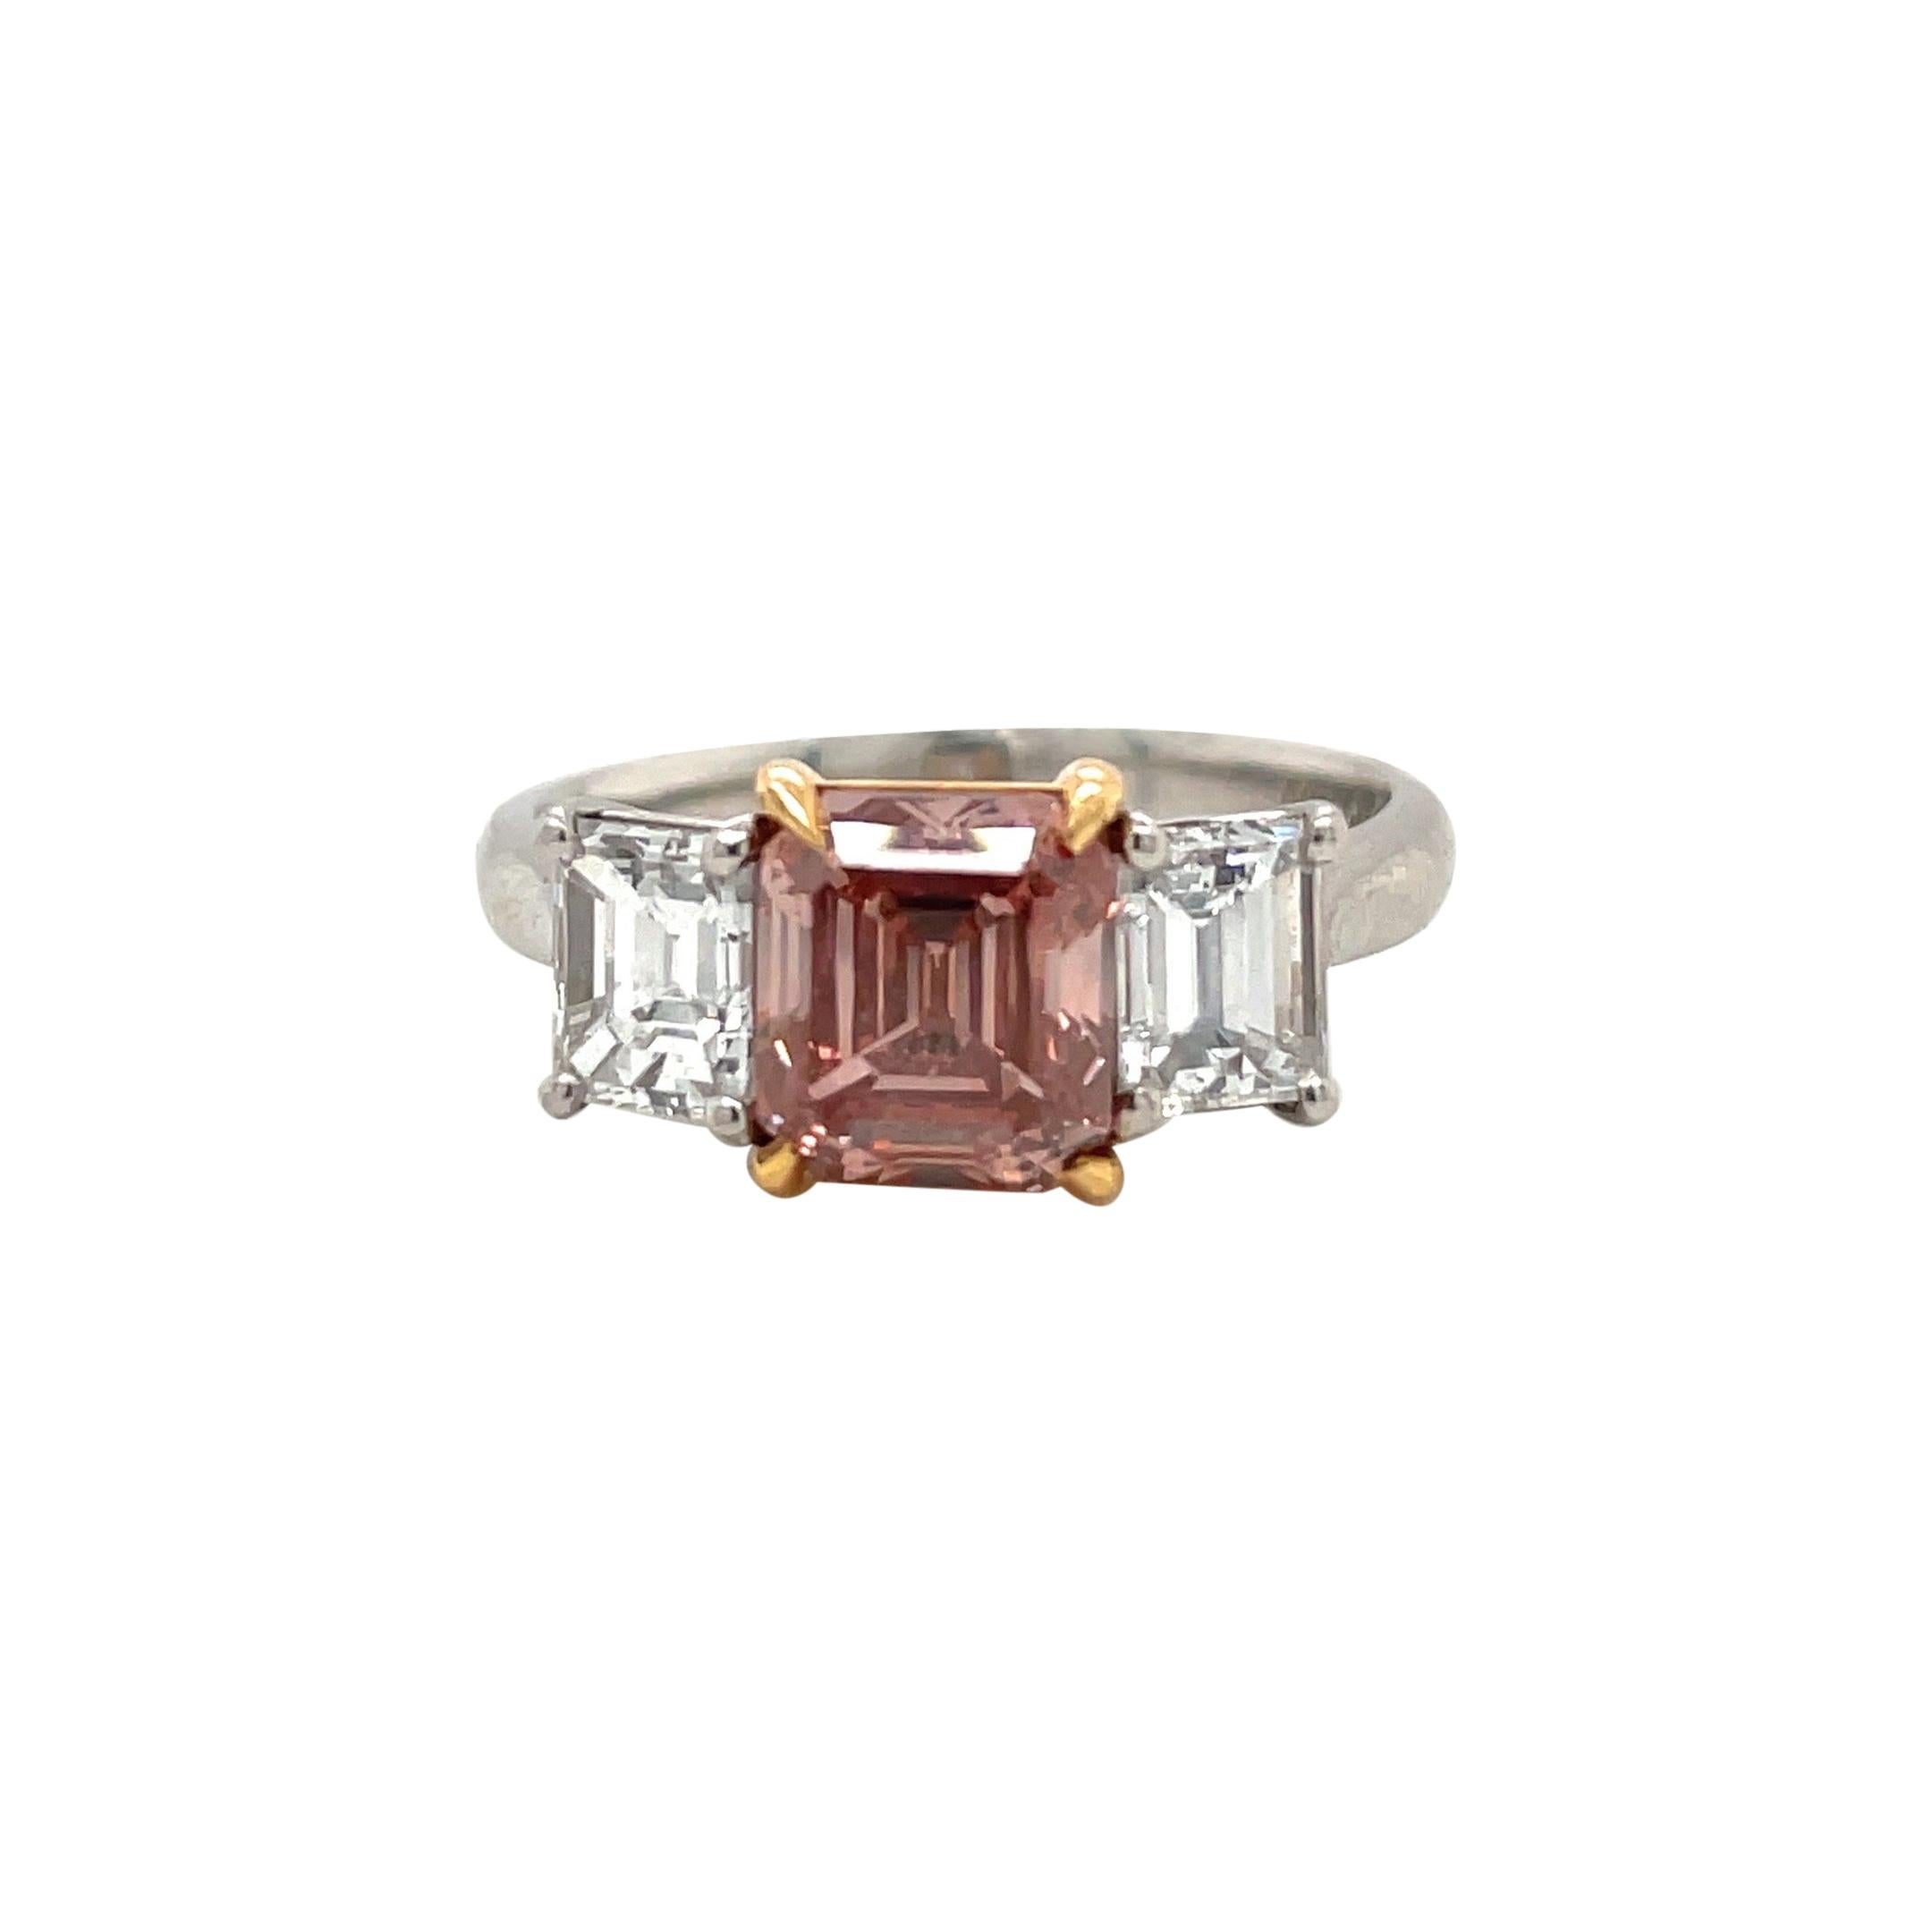 1.75ct GIA Natural Fancy Pink Emerald Cut Diamond Ring